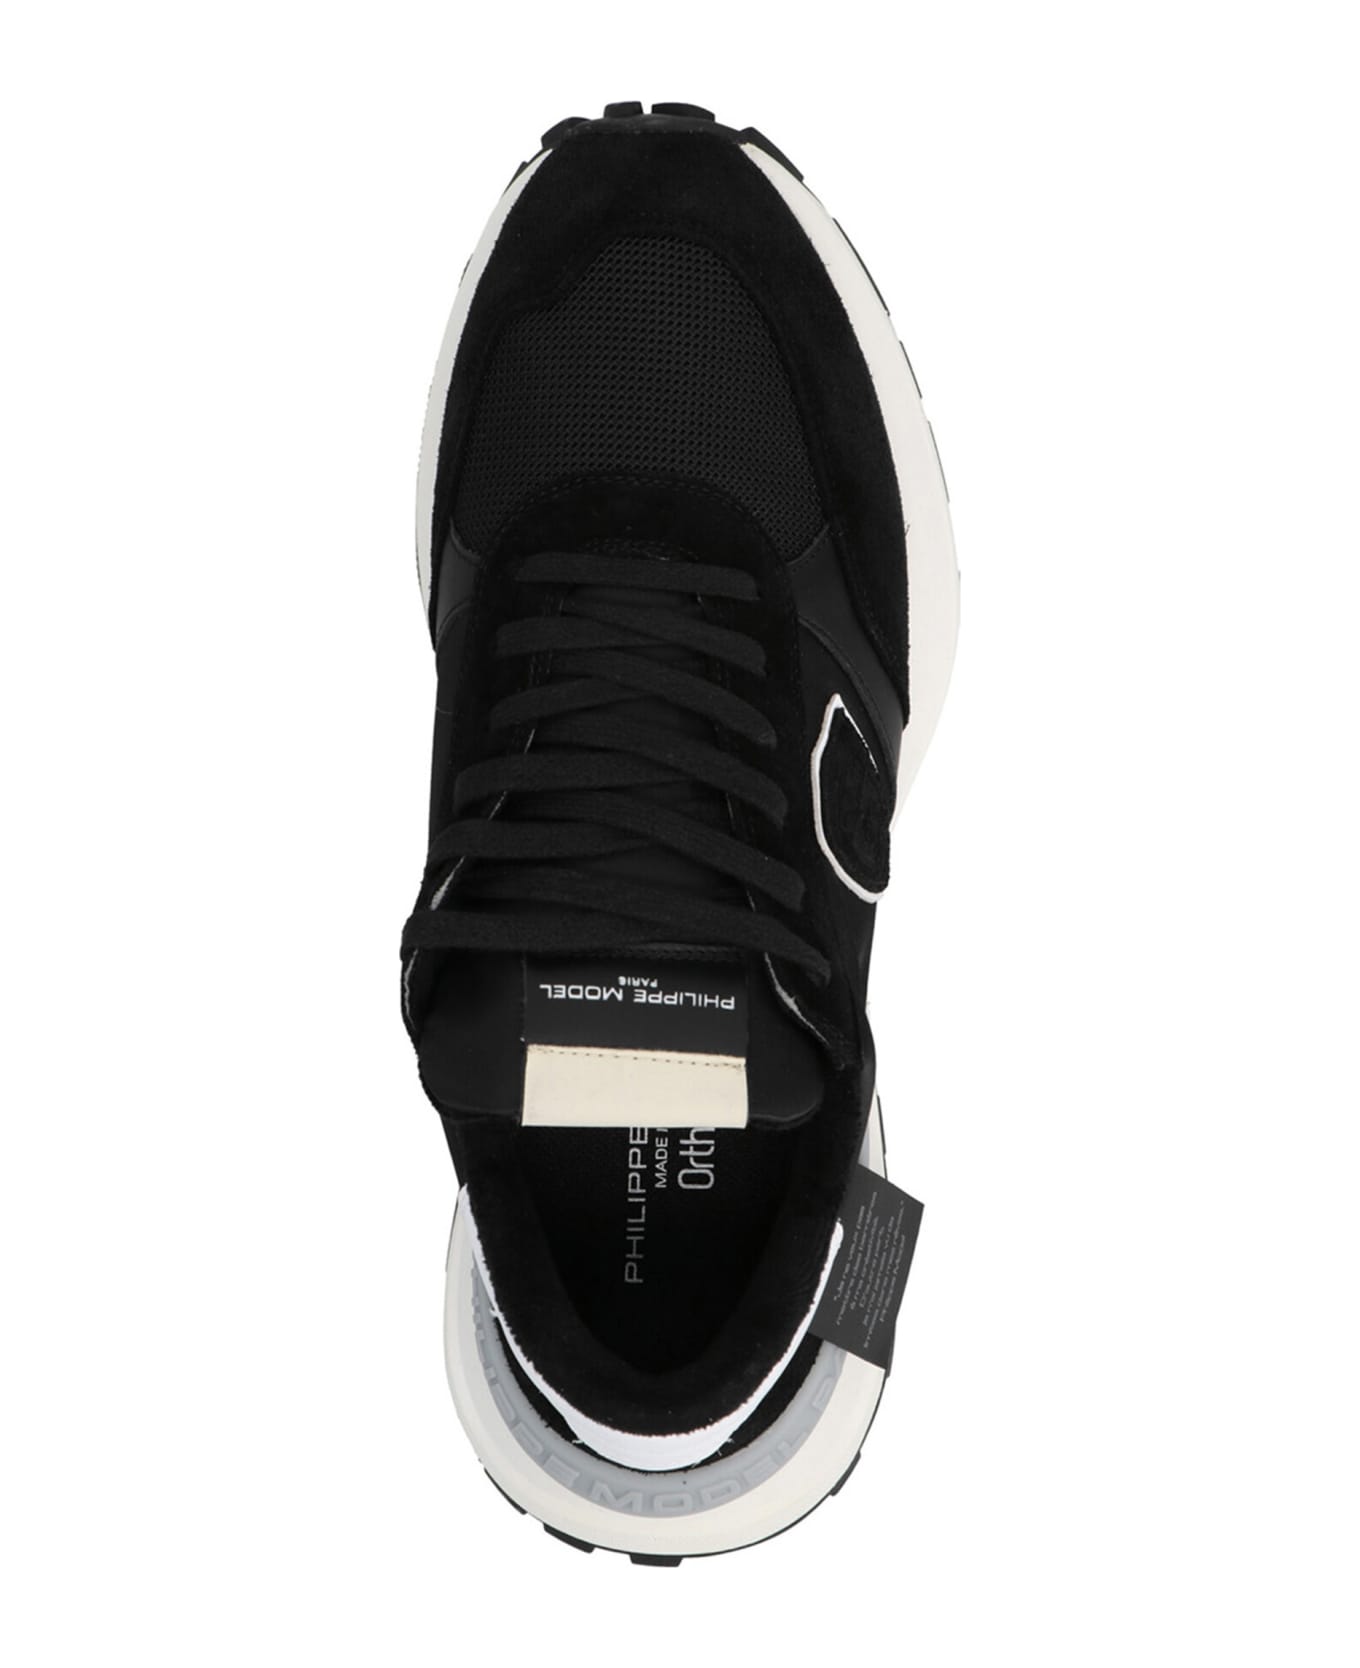 Philippe Model 'antibes' Sneakers - White/Black